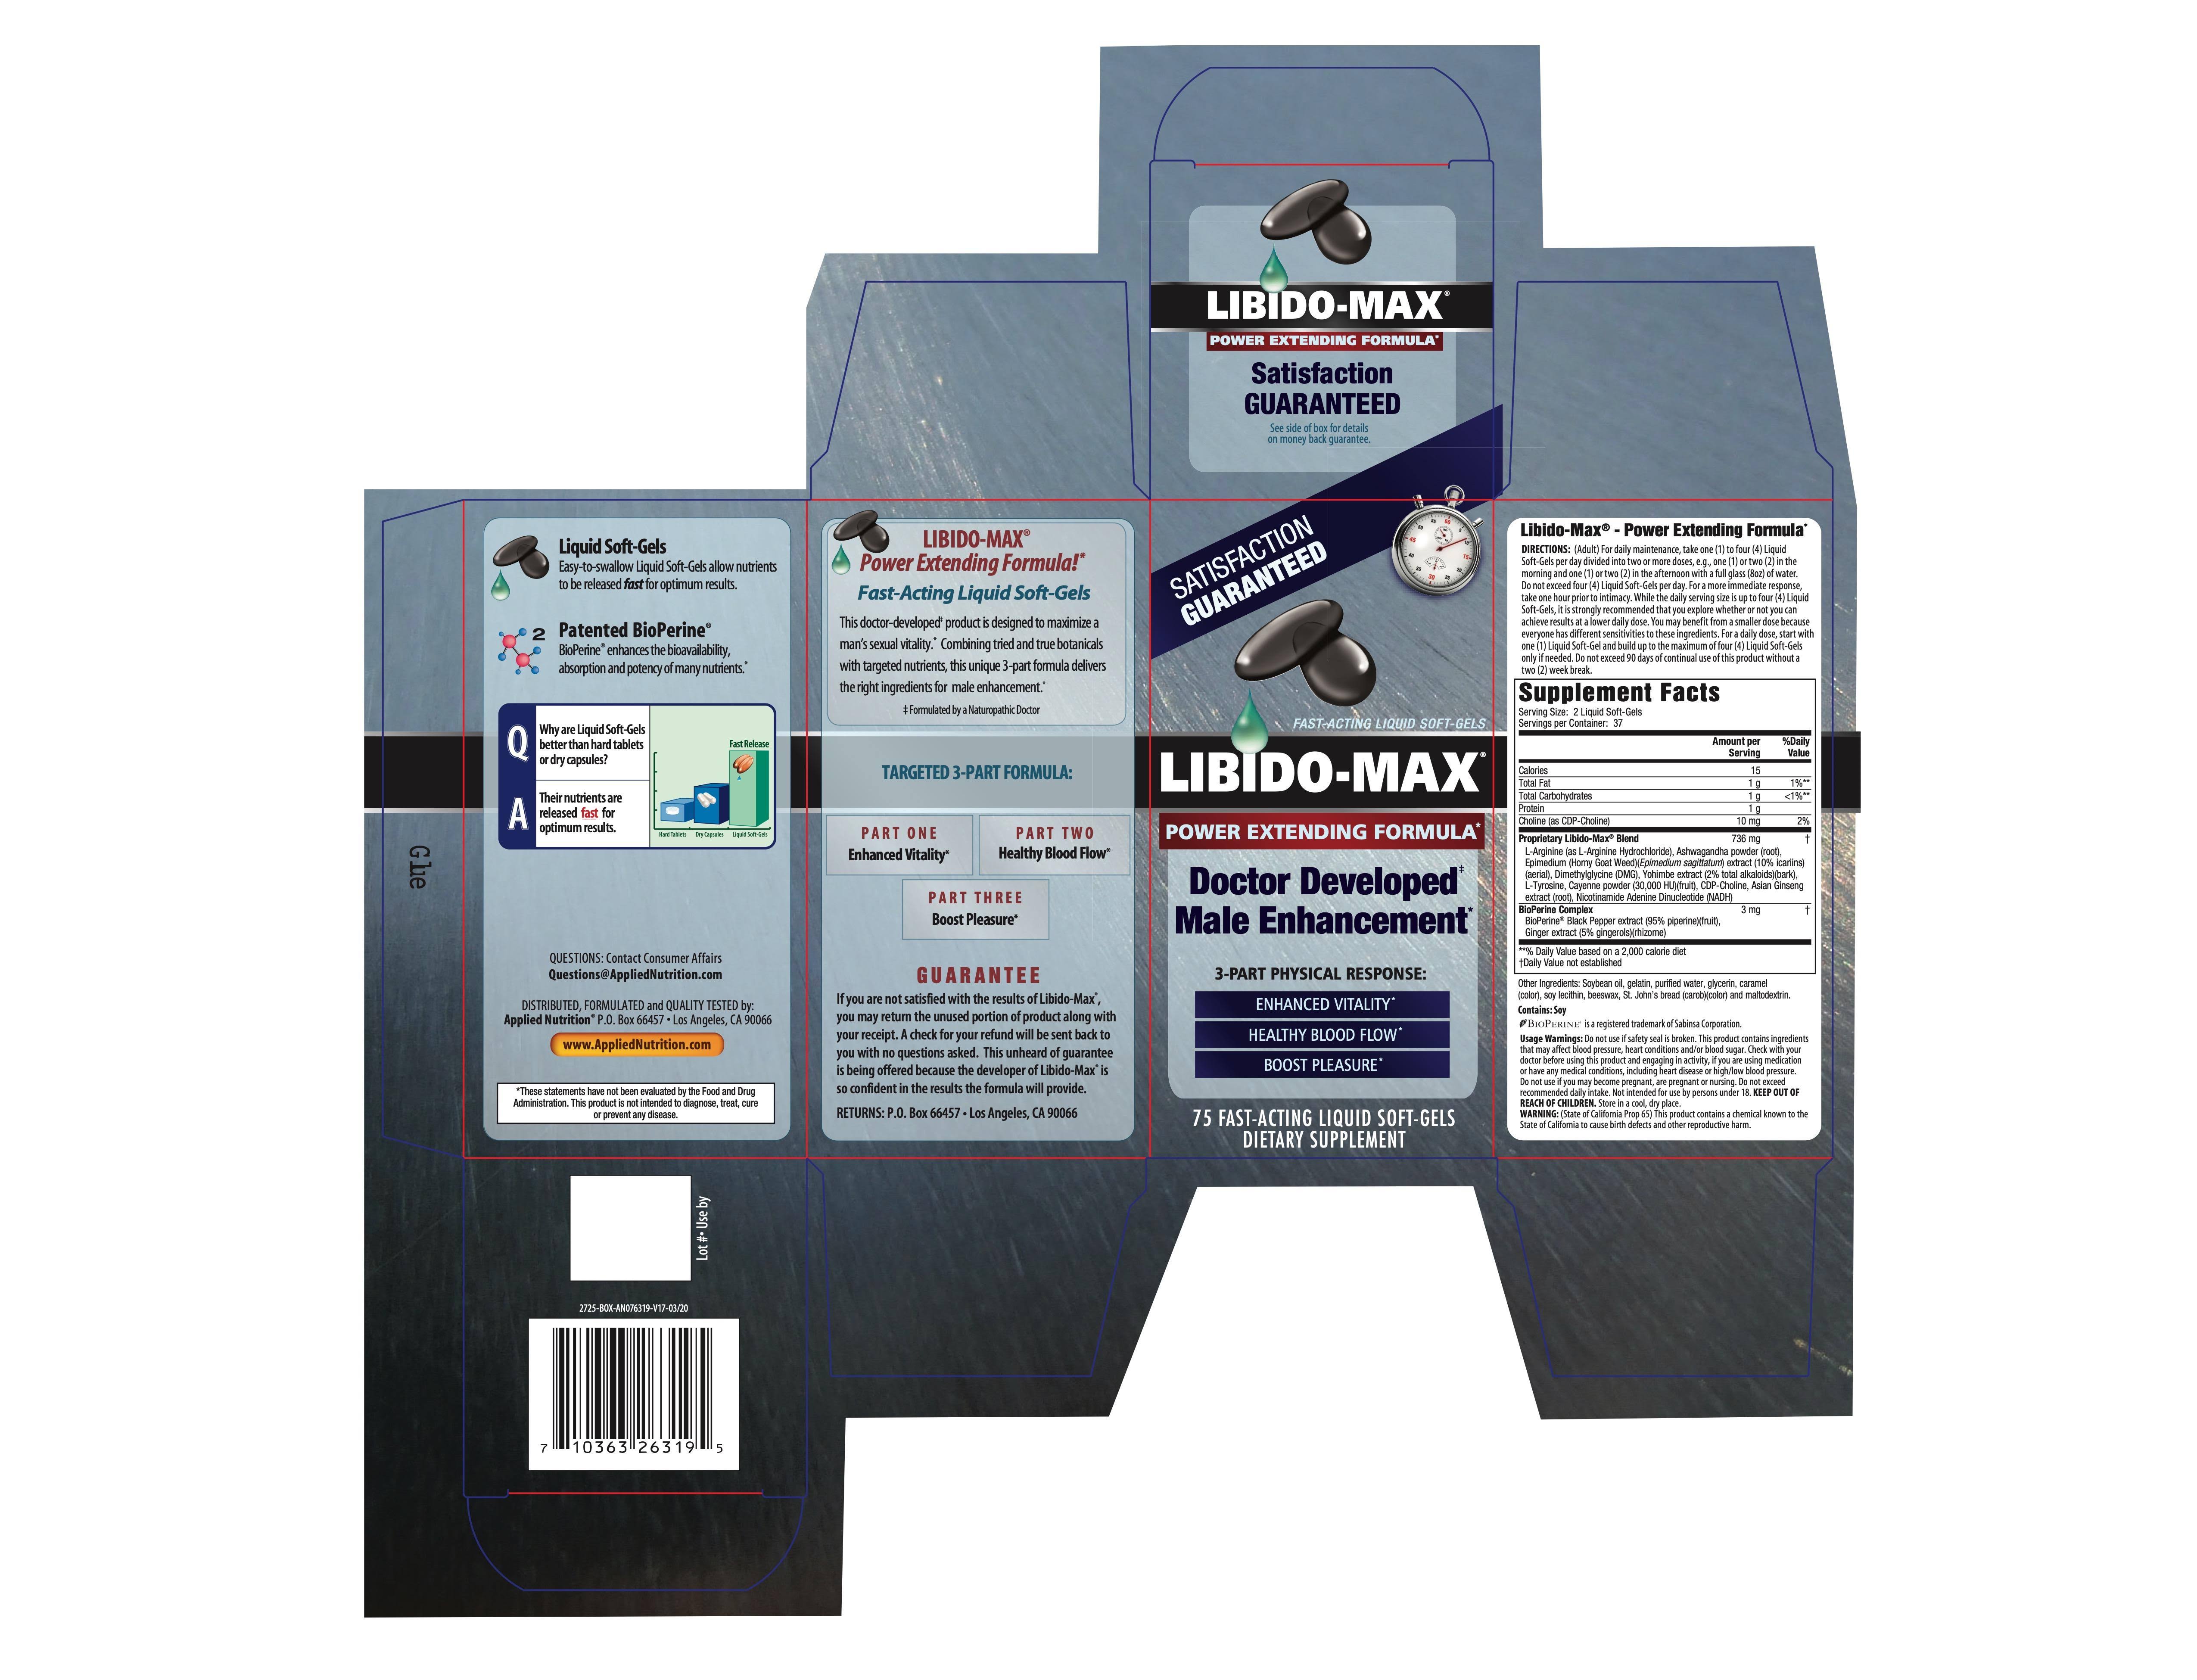 Libido-Max Power Extending Formula Doctor Developed Male Enhancement - 75 Fast-Acting Liquid Softgels